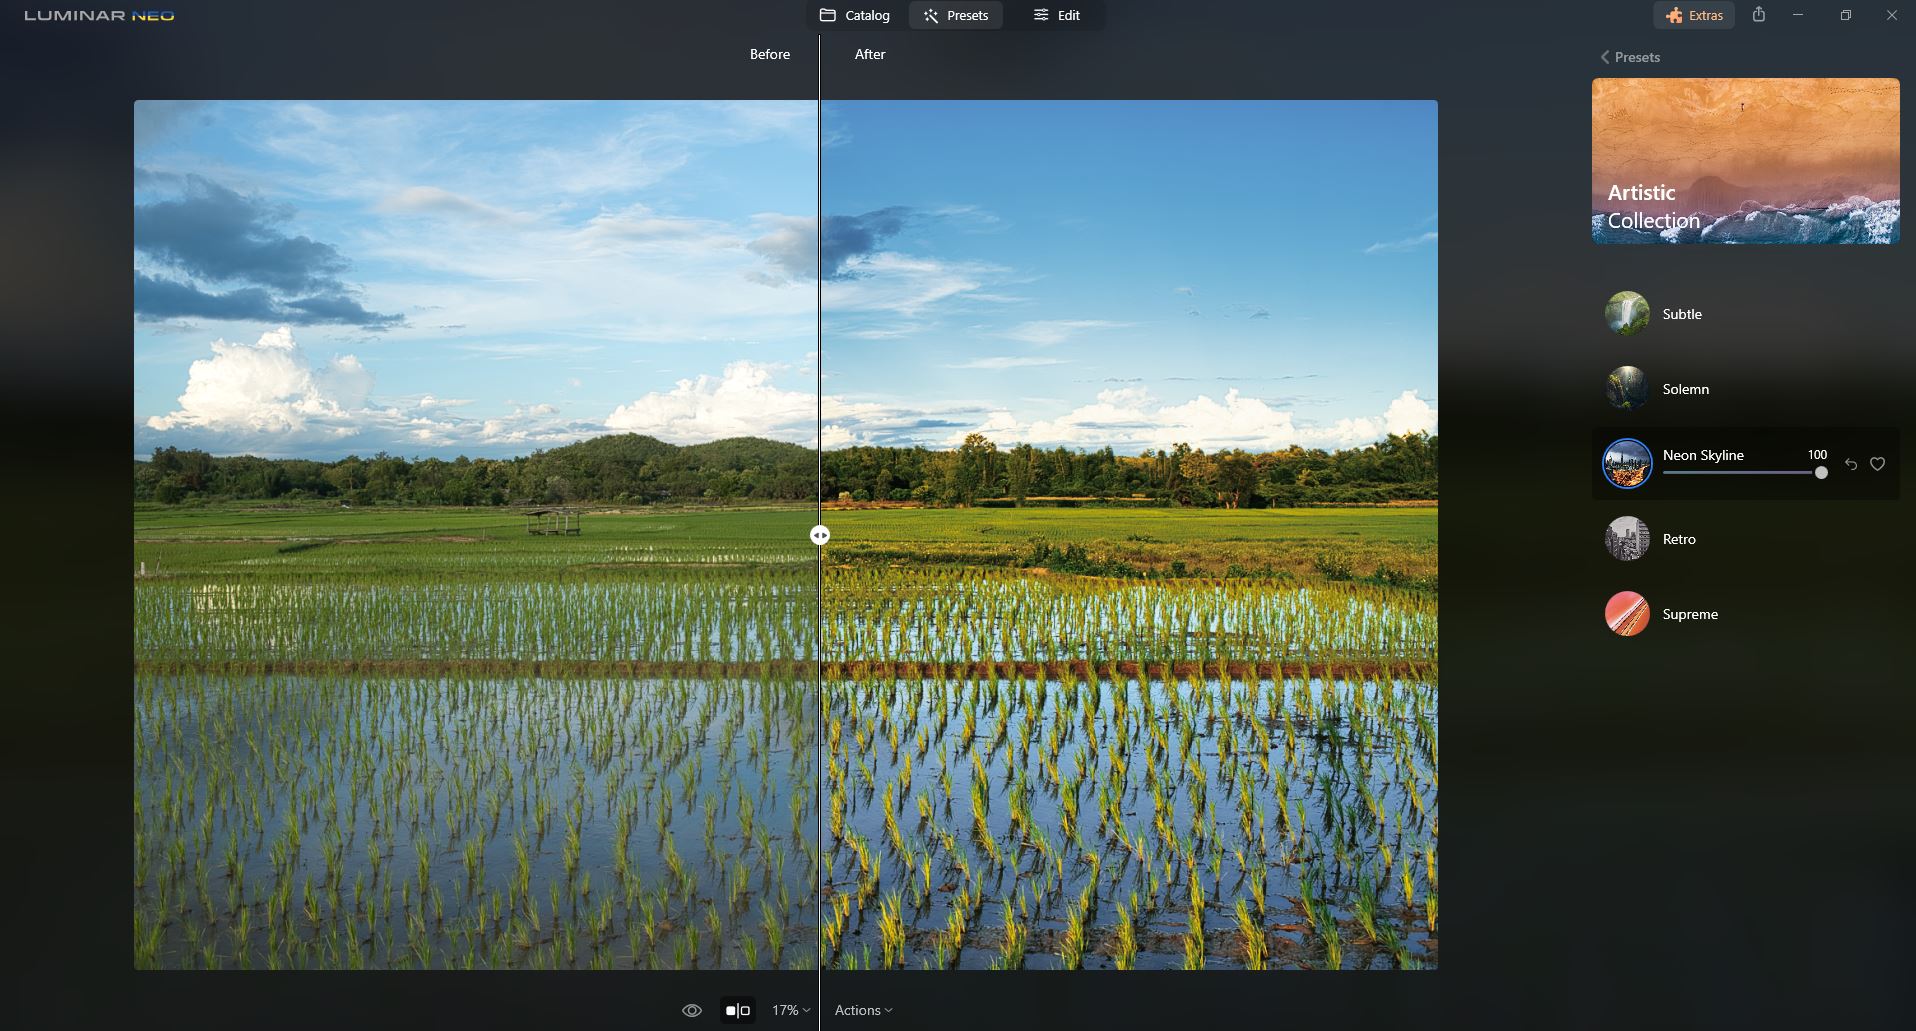 Luminar Neo Neon Skyline preset demonstation using a photo of rice fields